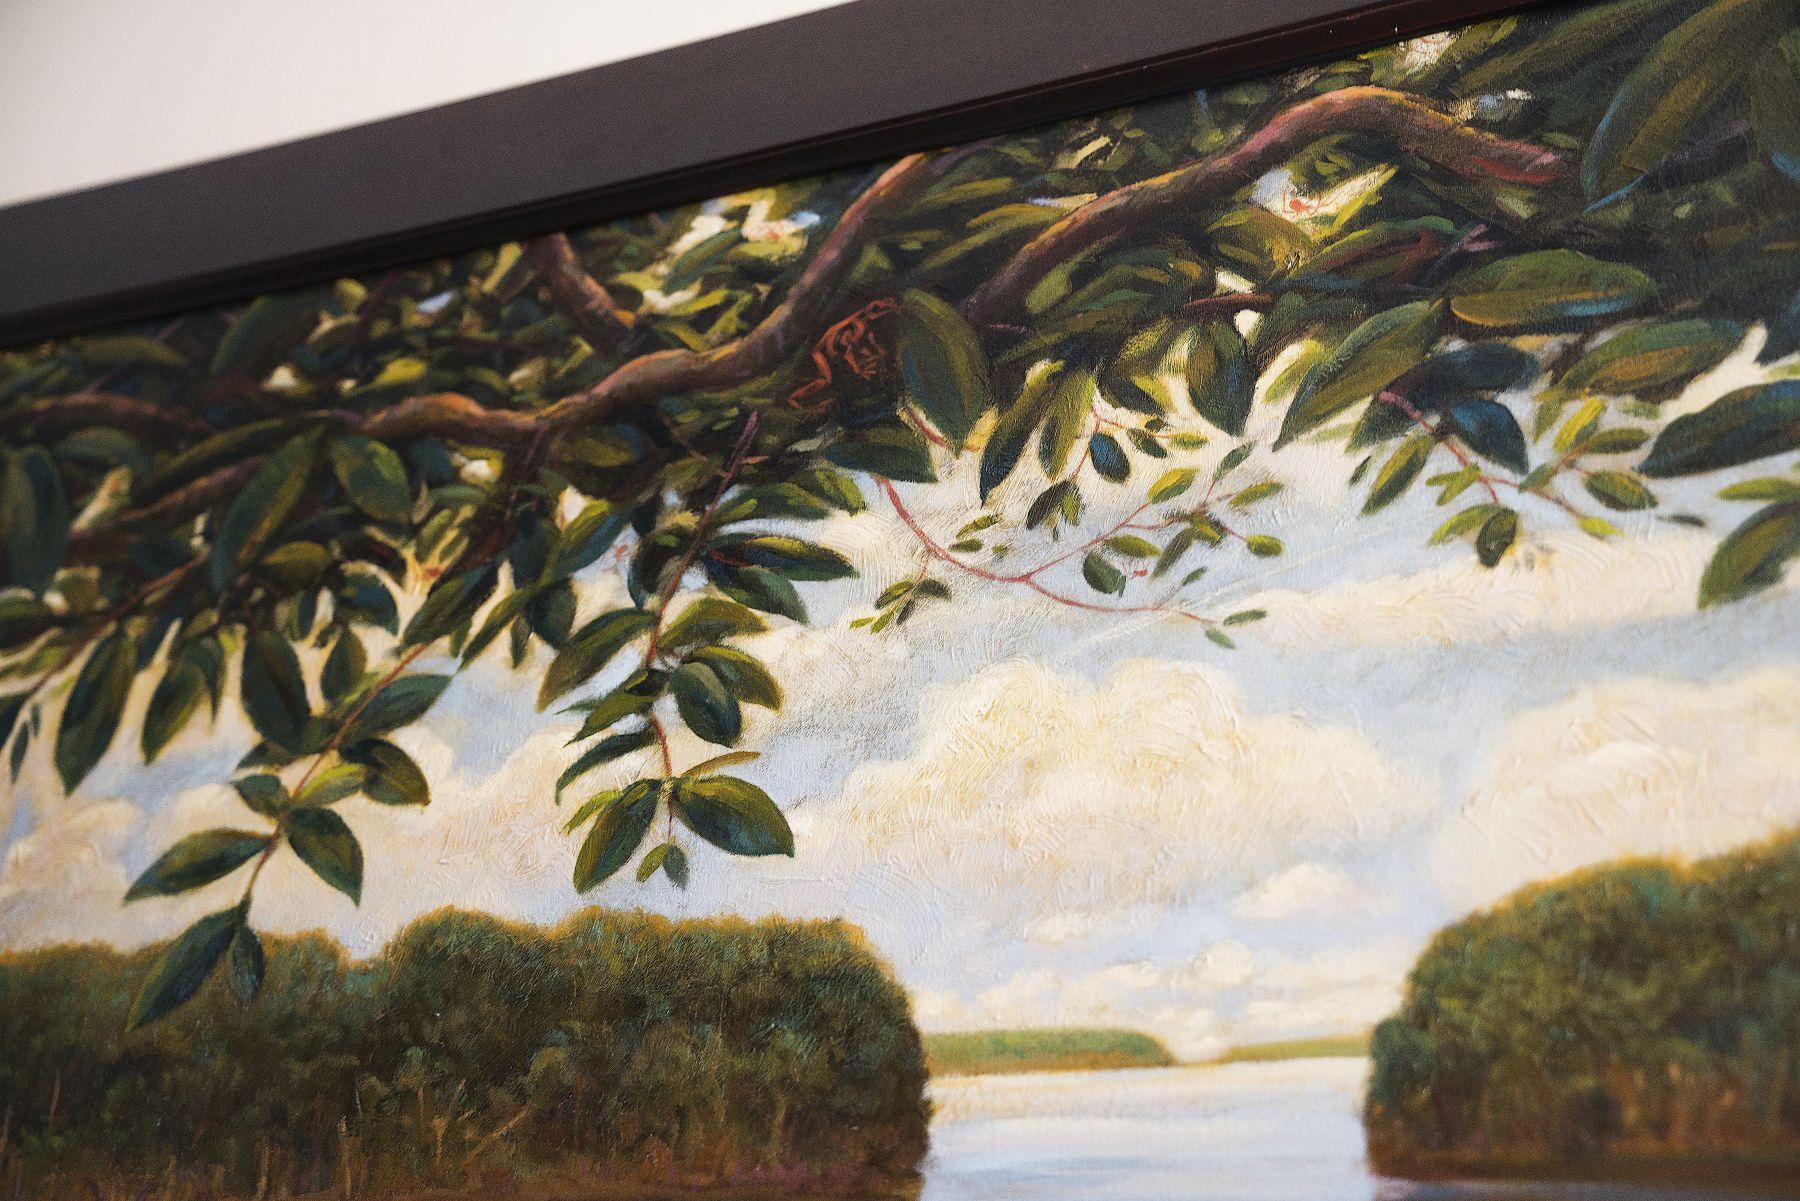 Lancée - Amazonian Arowana (large huile sur toile Natural World Big Fish Arowana) - Naturalisme Painting par ANDRE VON MORISSE